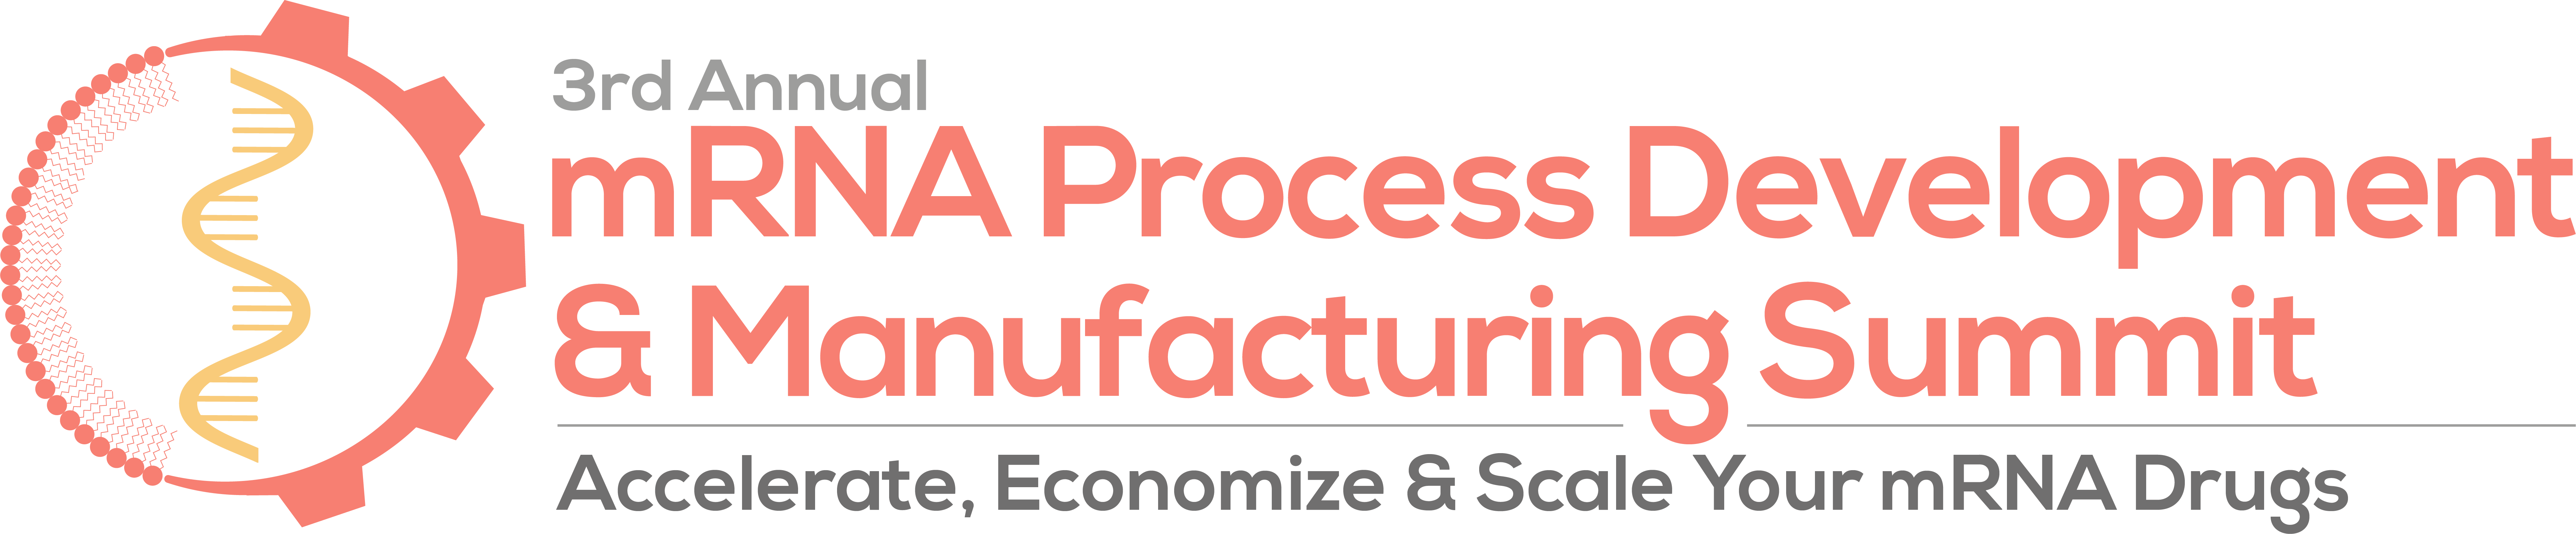 mRNA Process Development & Manufacturing Summit Logo